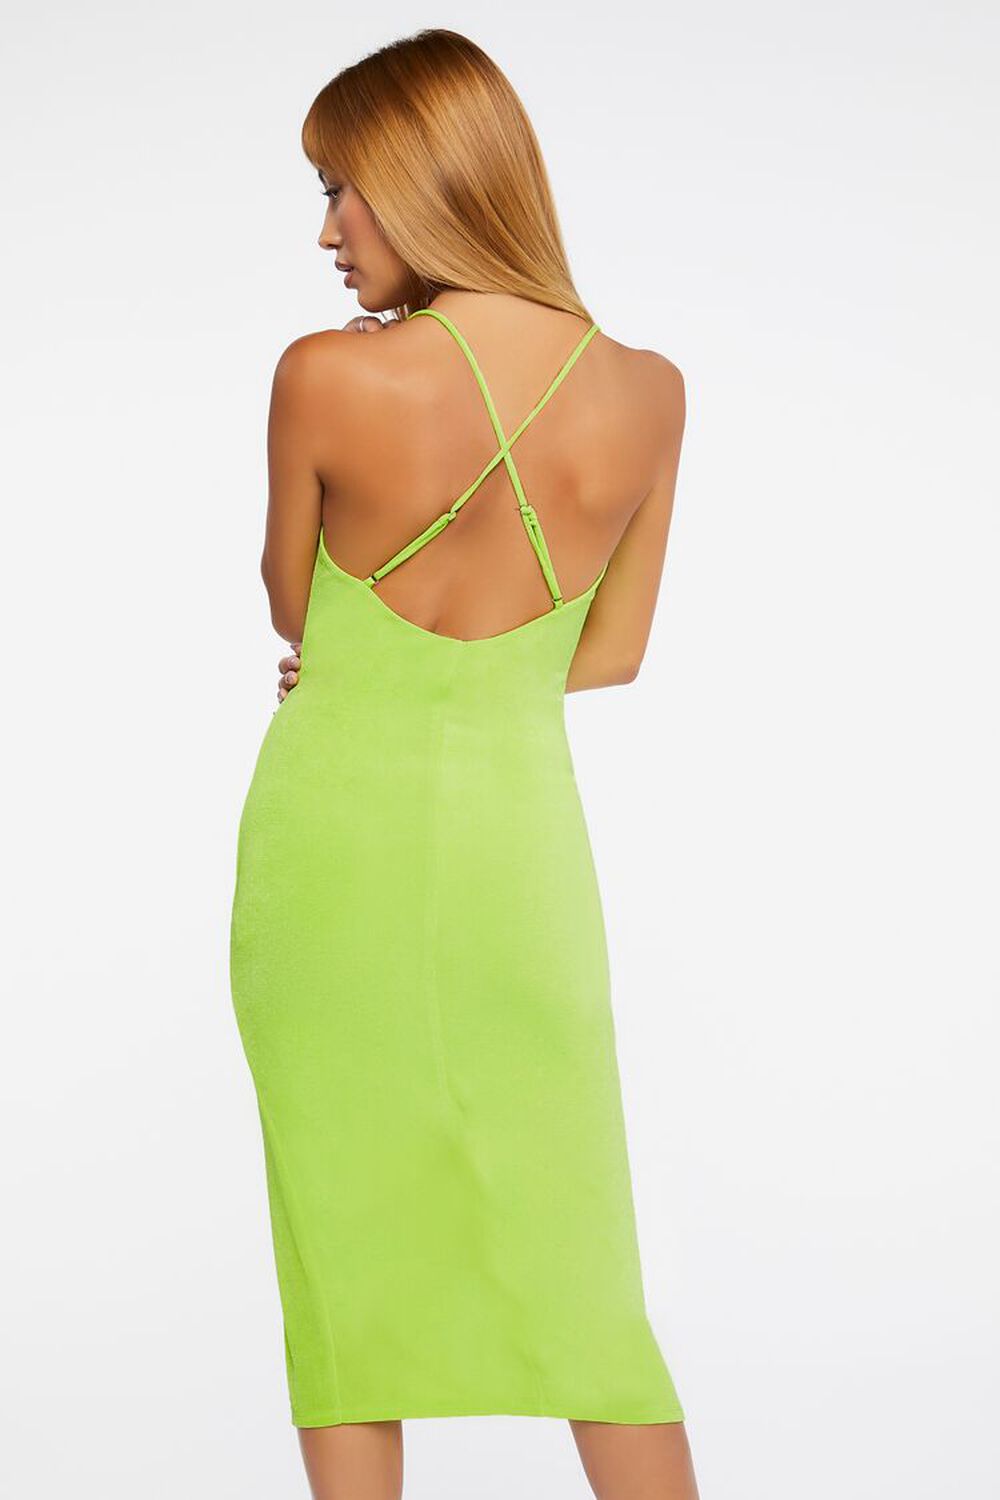 GREEN APPLE Cami Midi Slip Dress, image 3